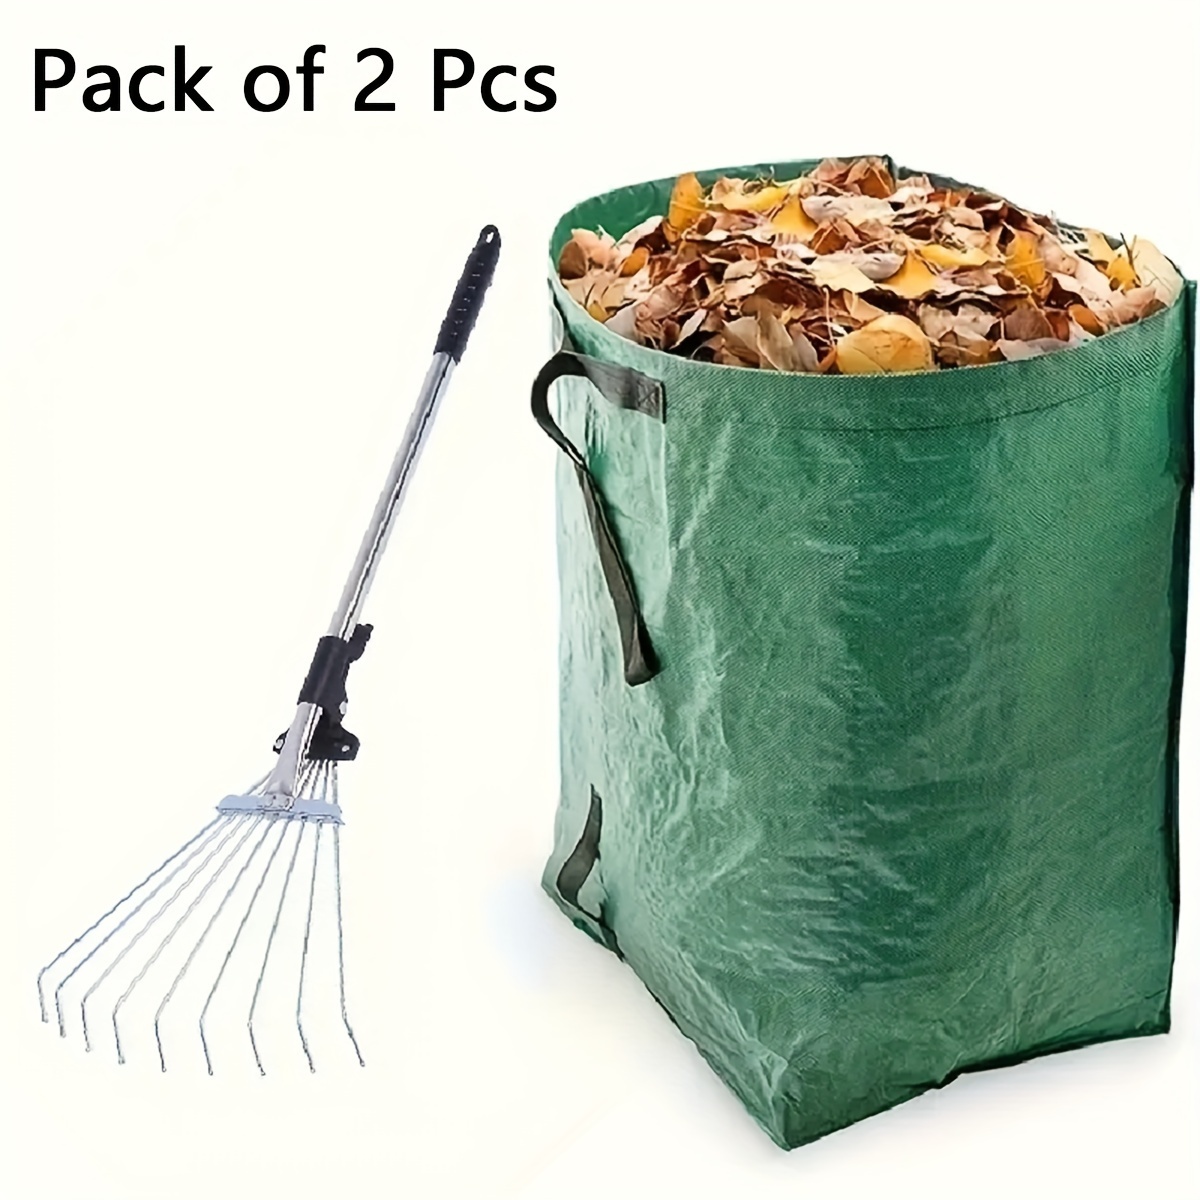 Gertens Lawn Bag - 5-bag pack